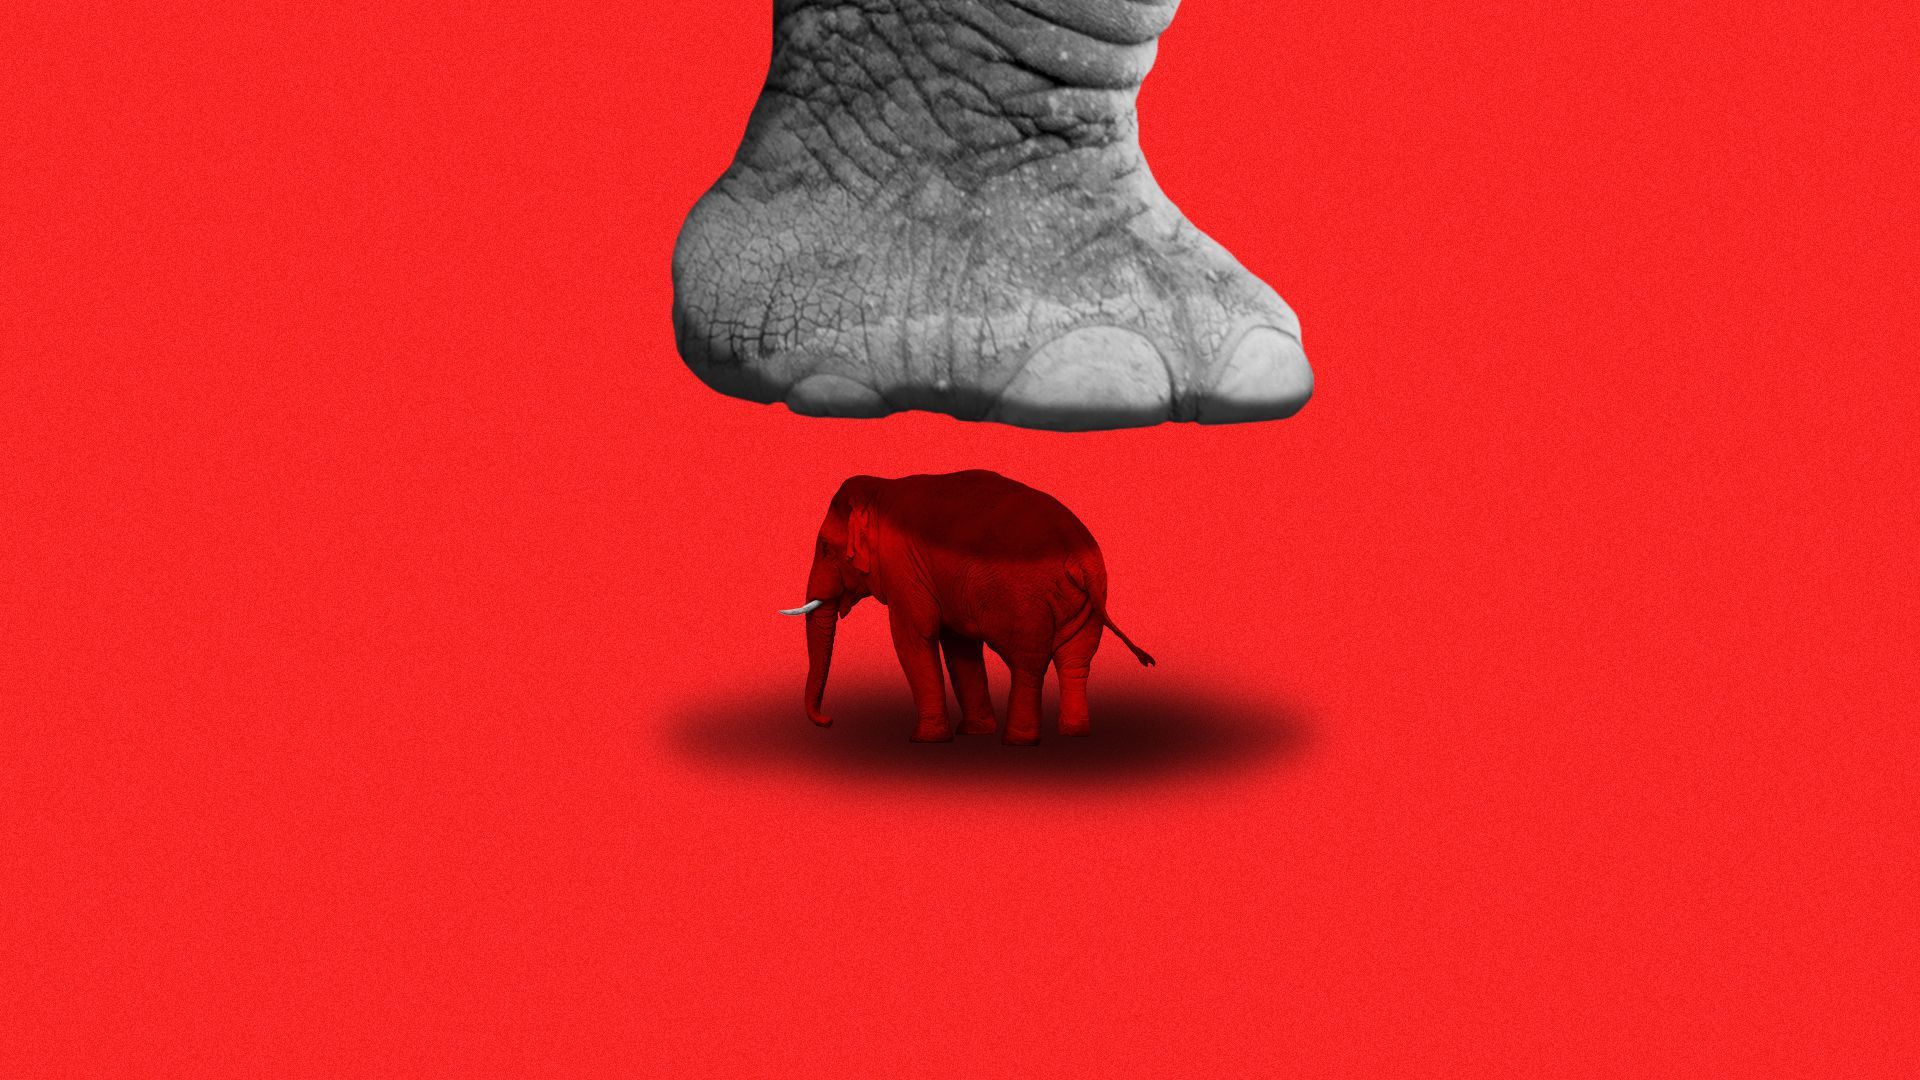 Elephant foot stomping on smaller elephant